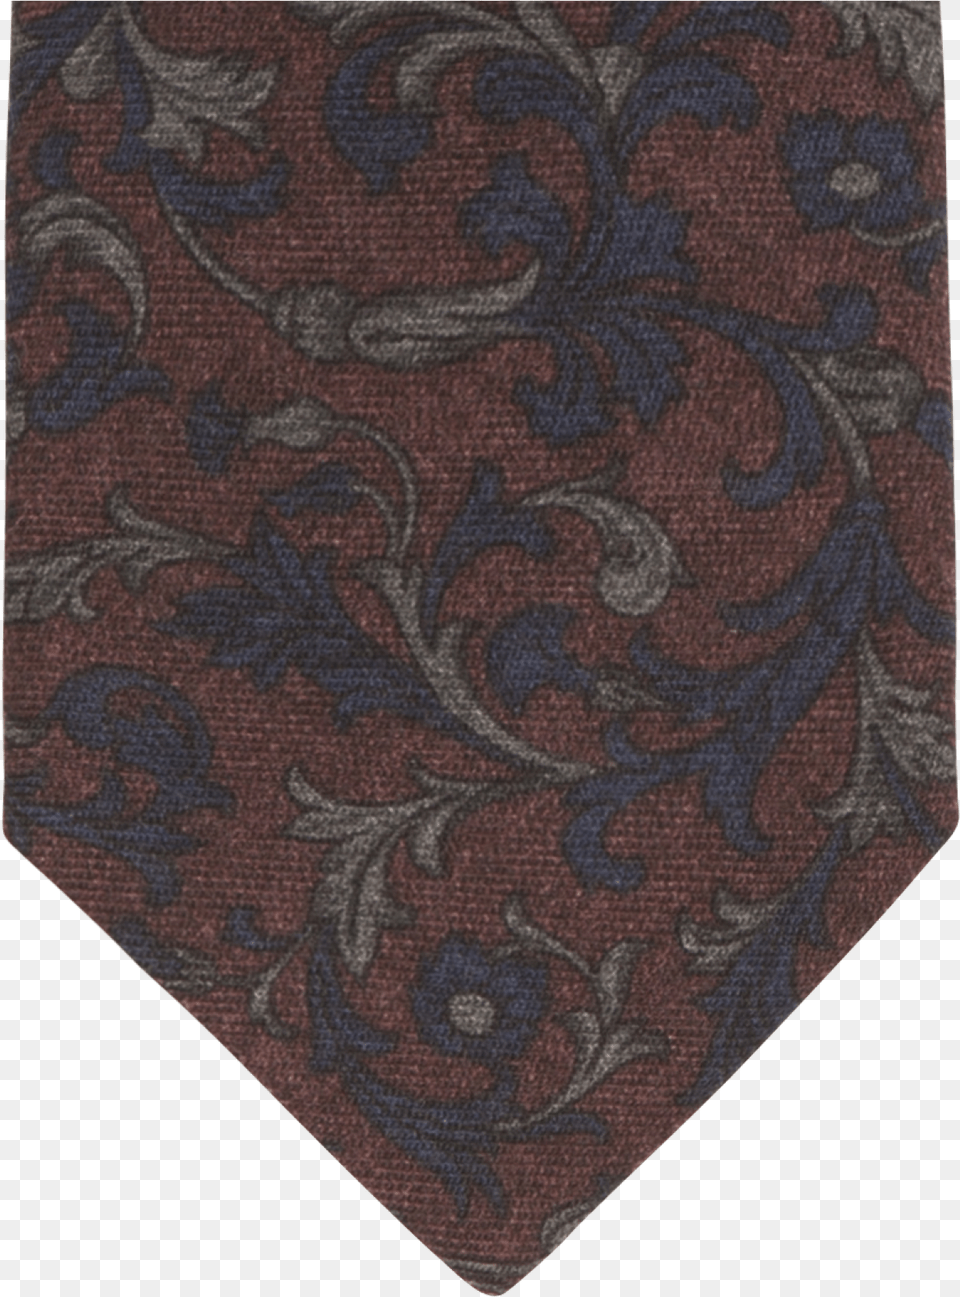 Burgundy Flower Paisley Print Wool Tiequottitlequotburgundy Carpet, Home Decor, Rug, Adult, Bride Png Image